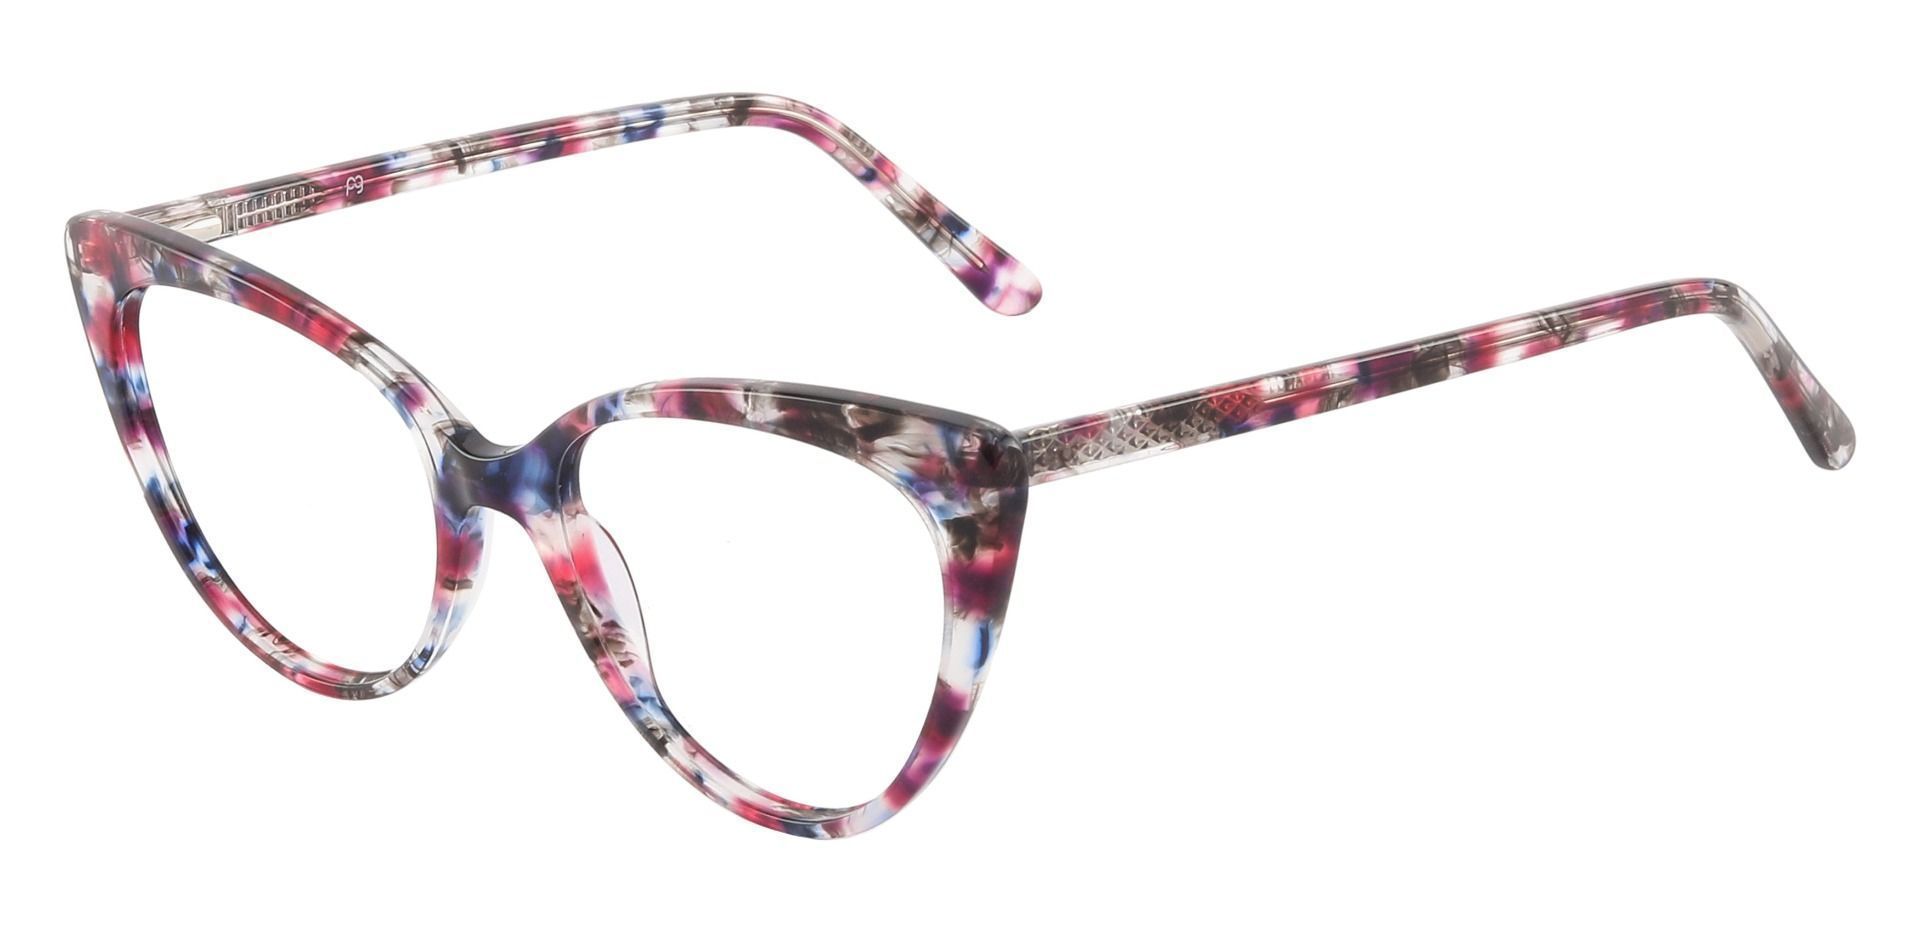 Bristol Cat Eye Non-Rx Glasses - Red